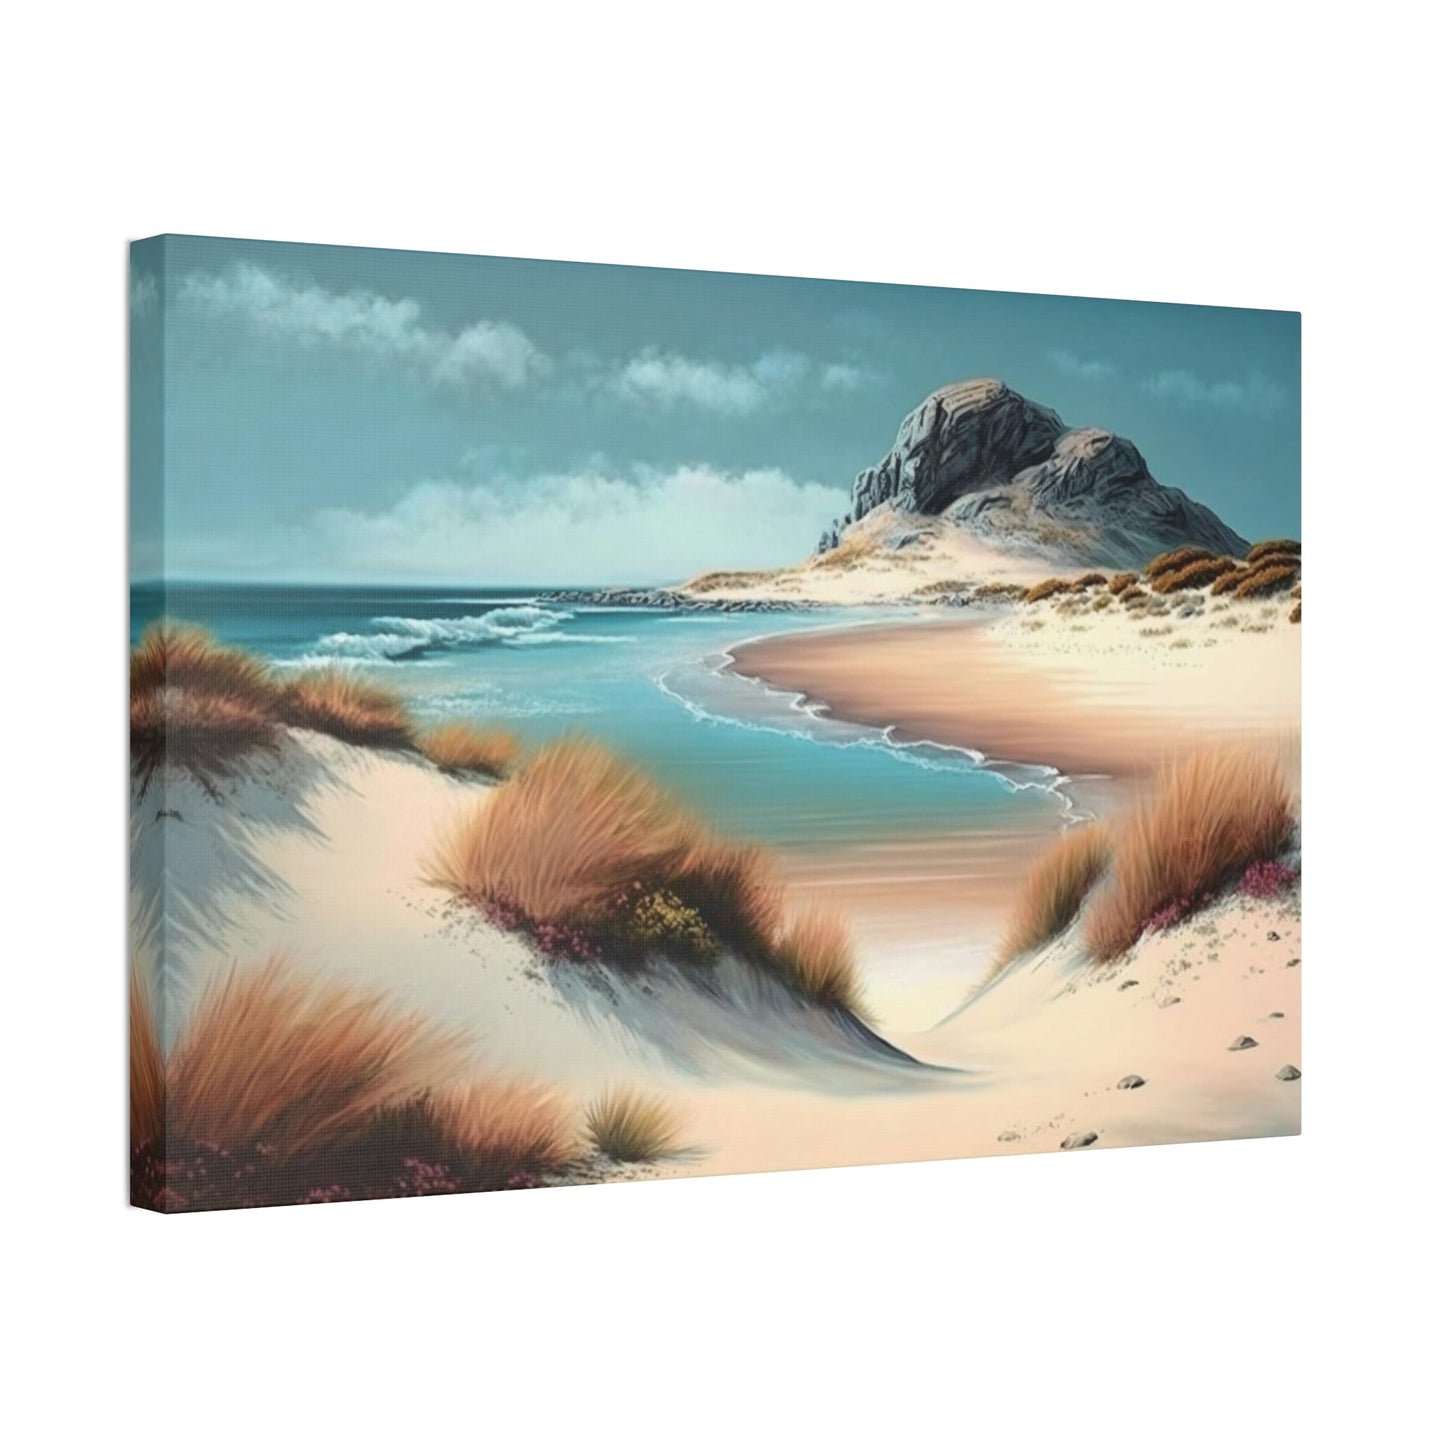 Oceanic Escape: Natural Canvas Art of an Island Beach